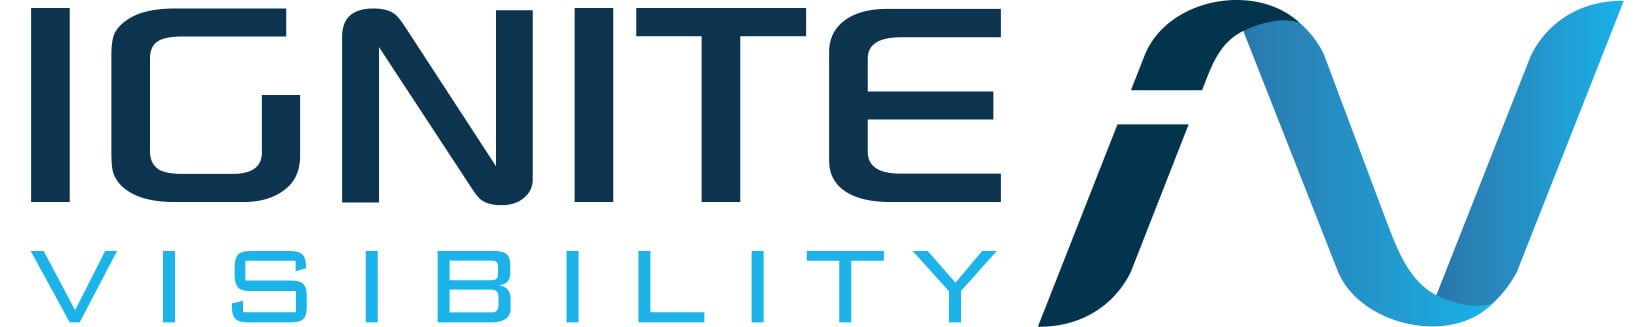 Best SEO PR Agency Logo: Ignite Visibility